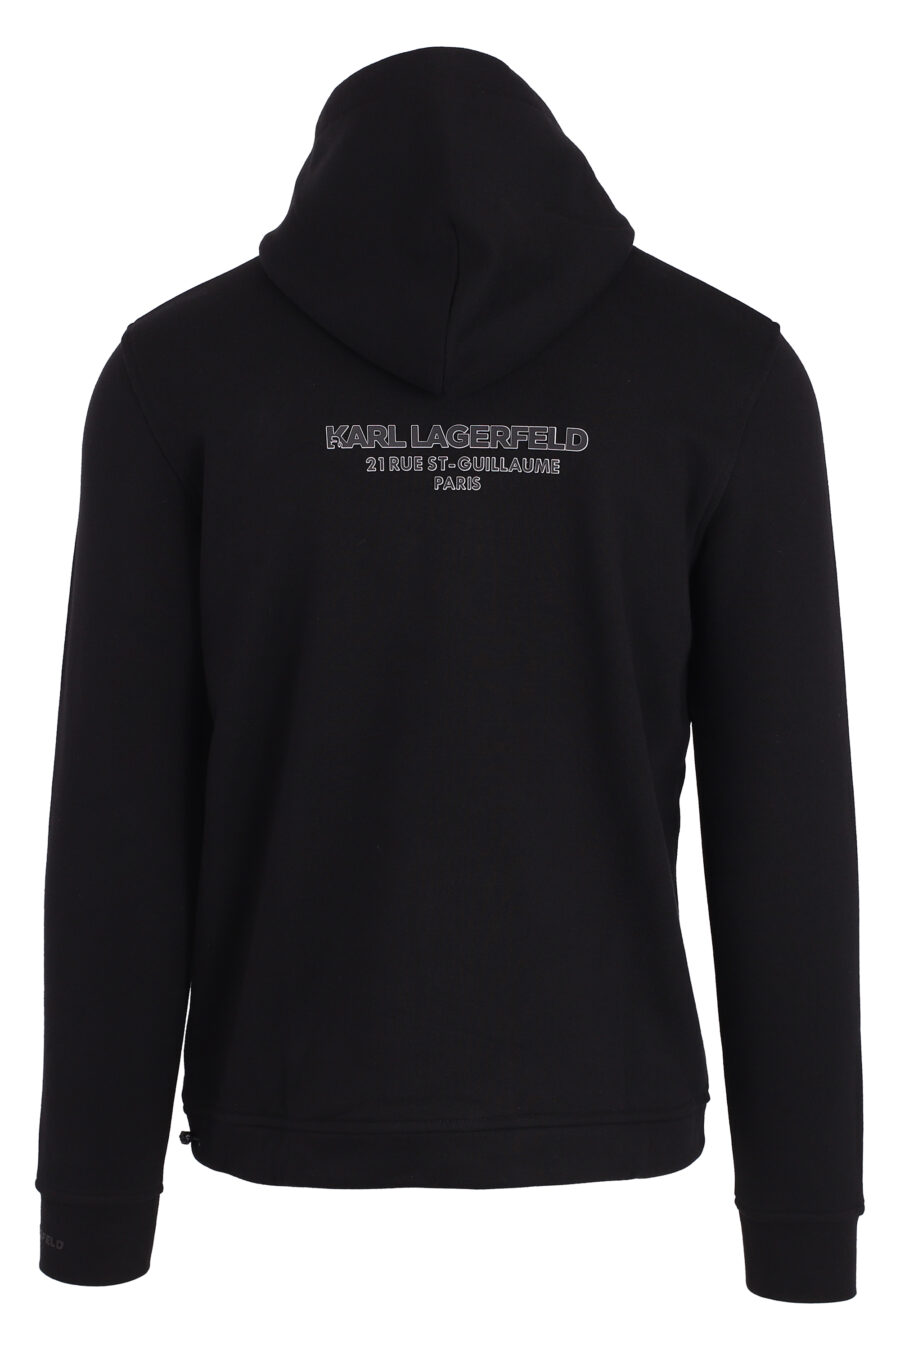 Black sweatshirt with hood and zip pocket with orange square logo - IMG 4729